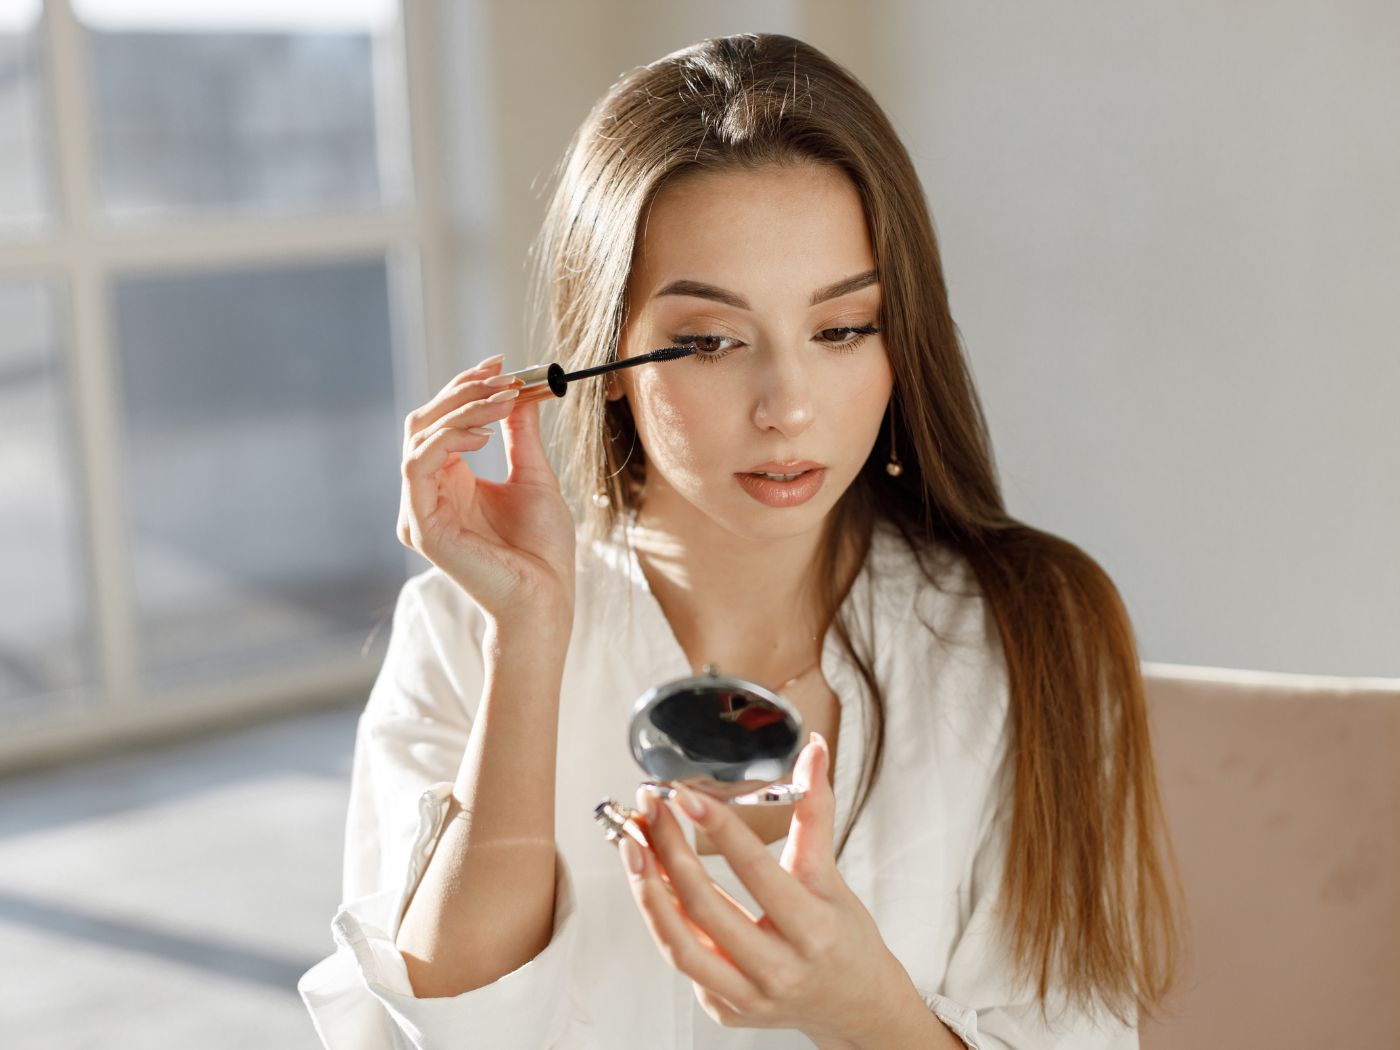 Woman applying mascara using a compact mirror